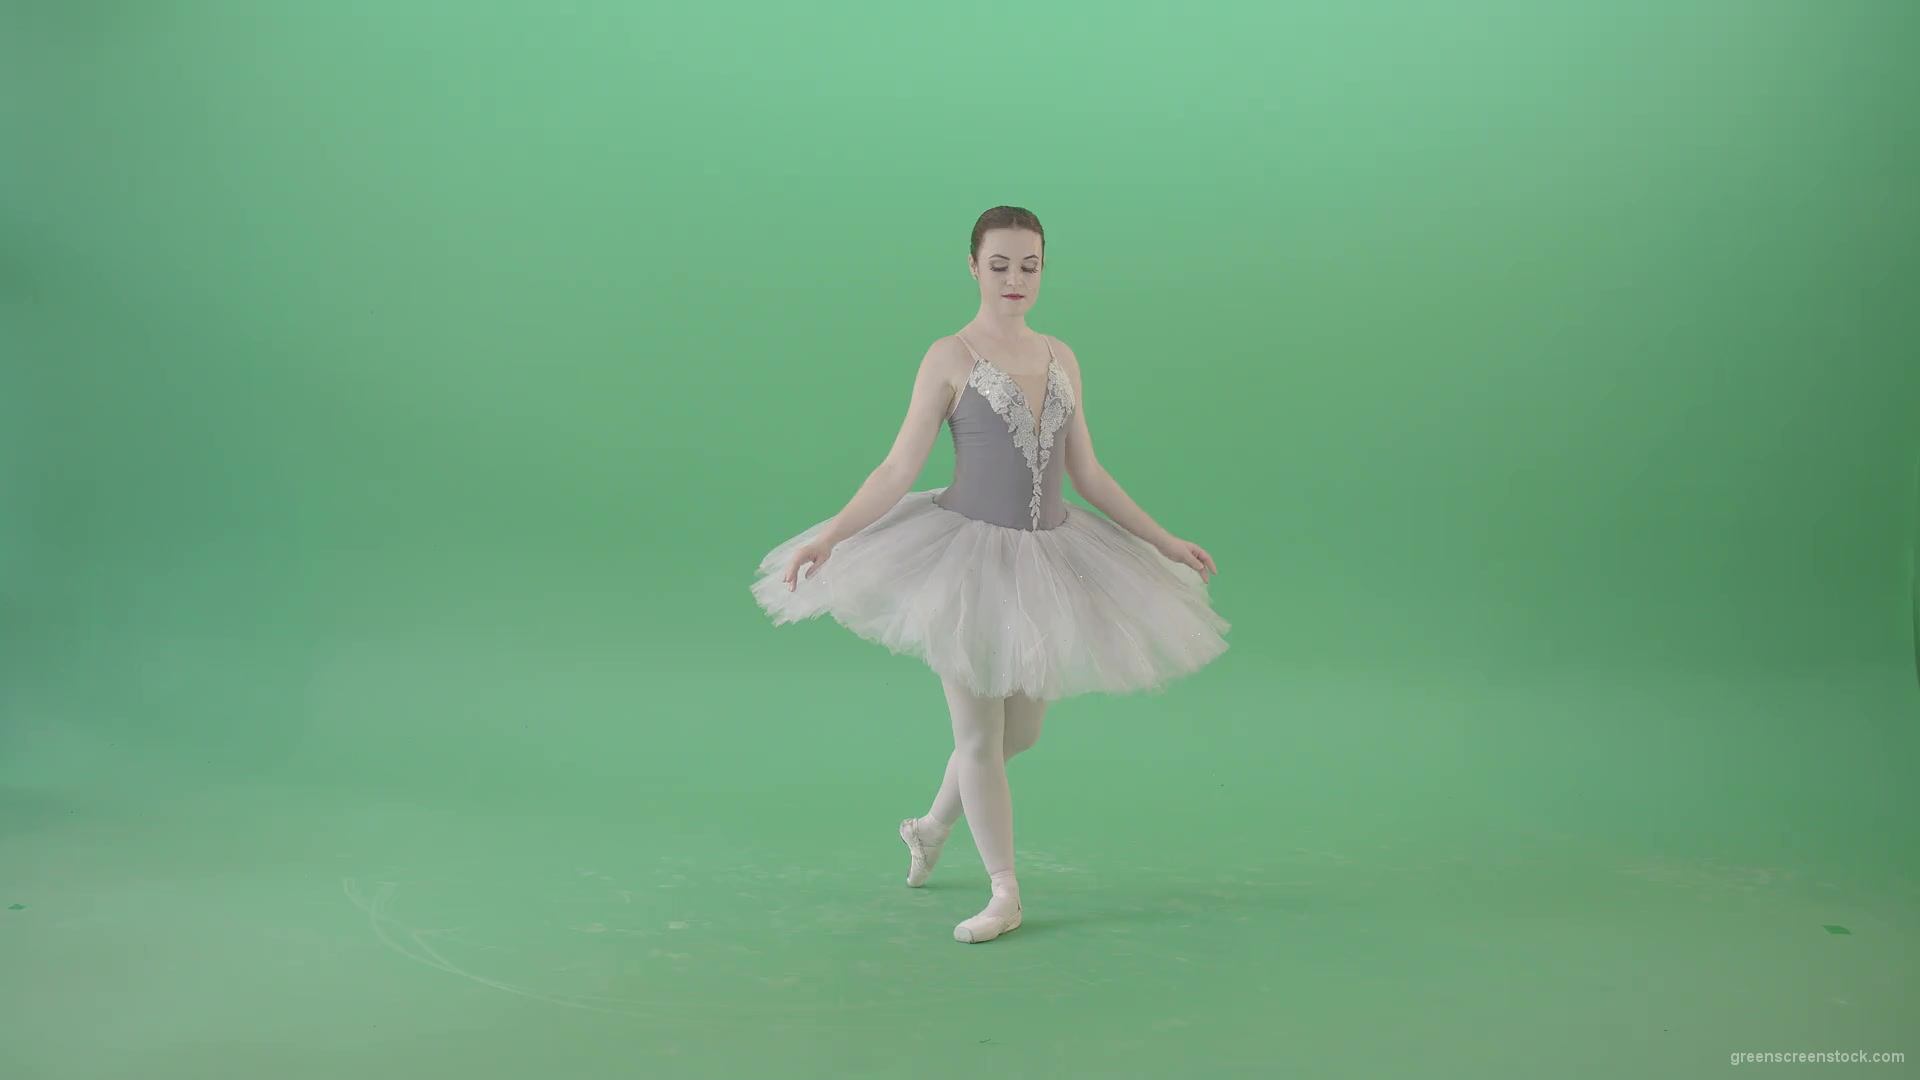 Ballerina-Woman-dancing-elegnatly-ballet-swan-lake-dance-in-green-screen-studio-4K-Video-Footage-1920_001 Green Screen Stock